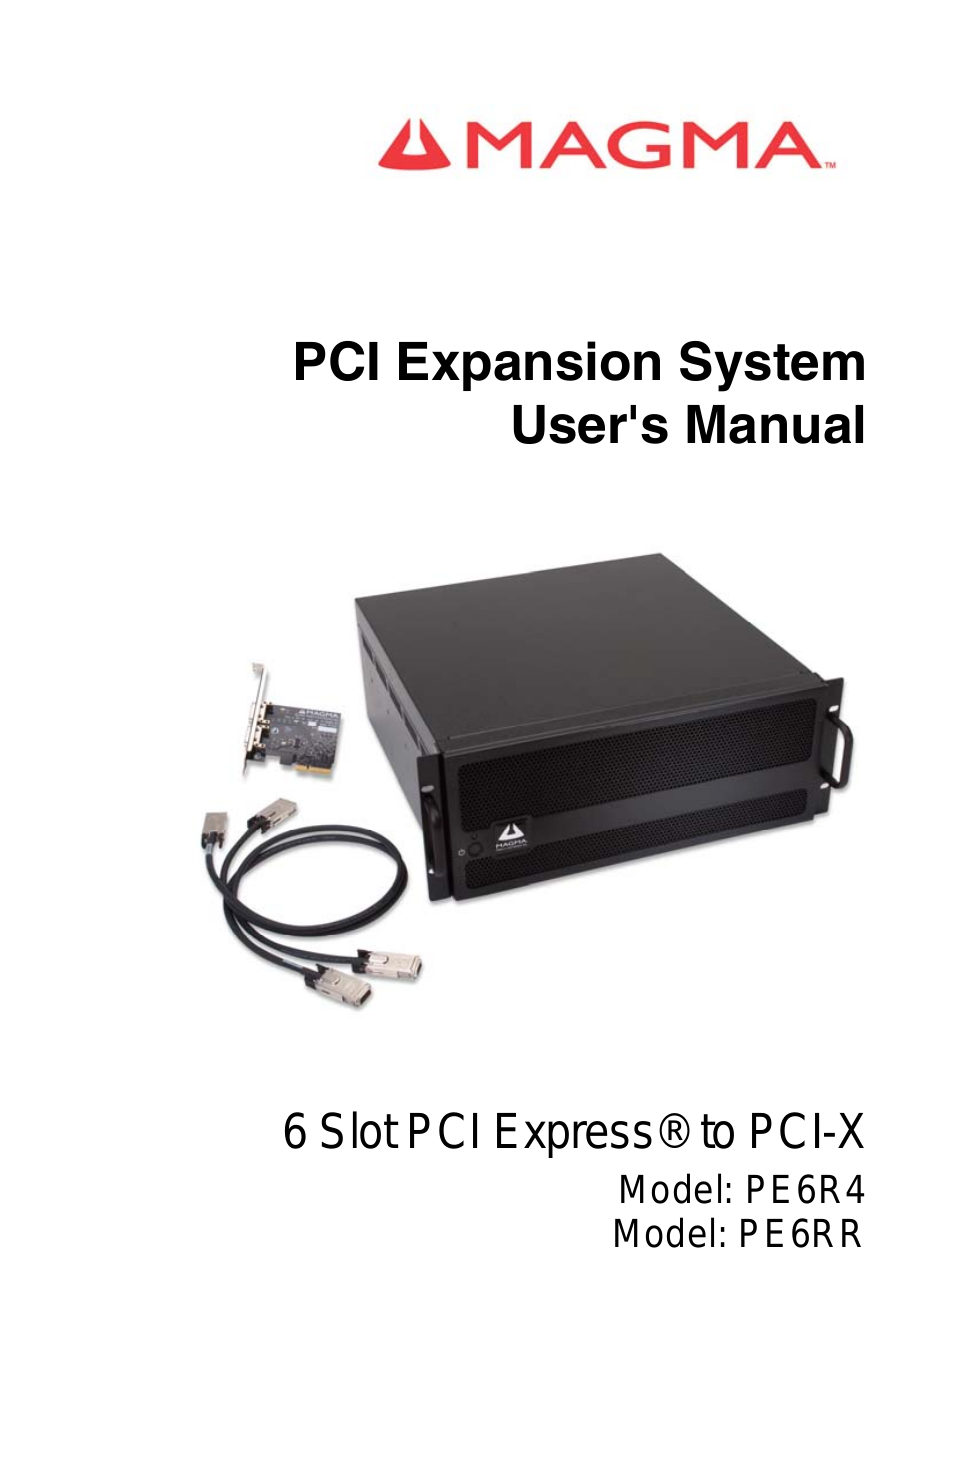 PCI Expansion System PE6R4